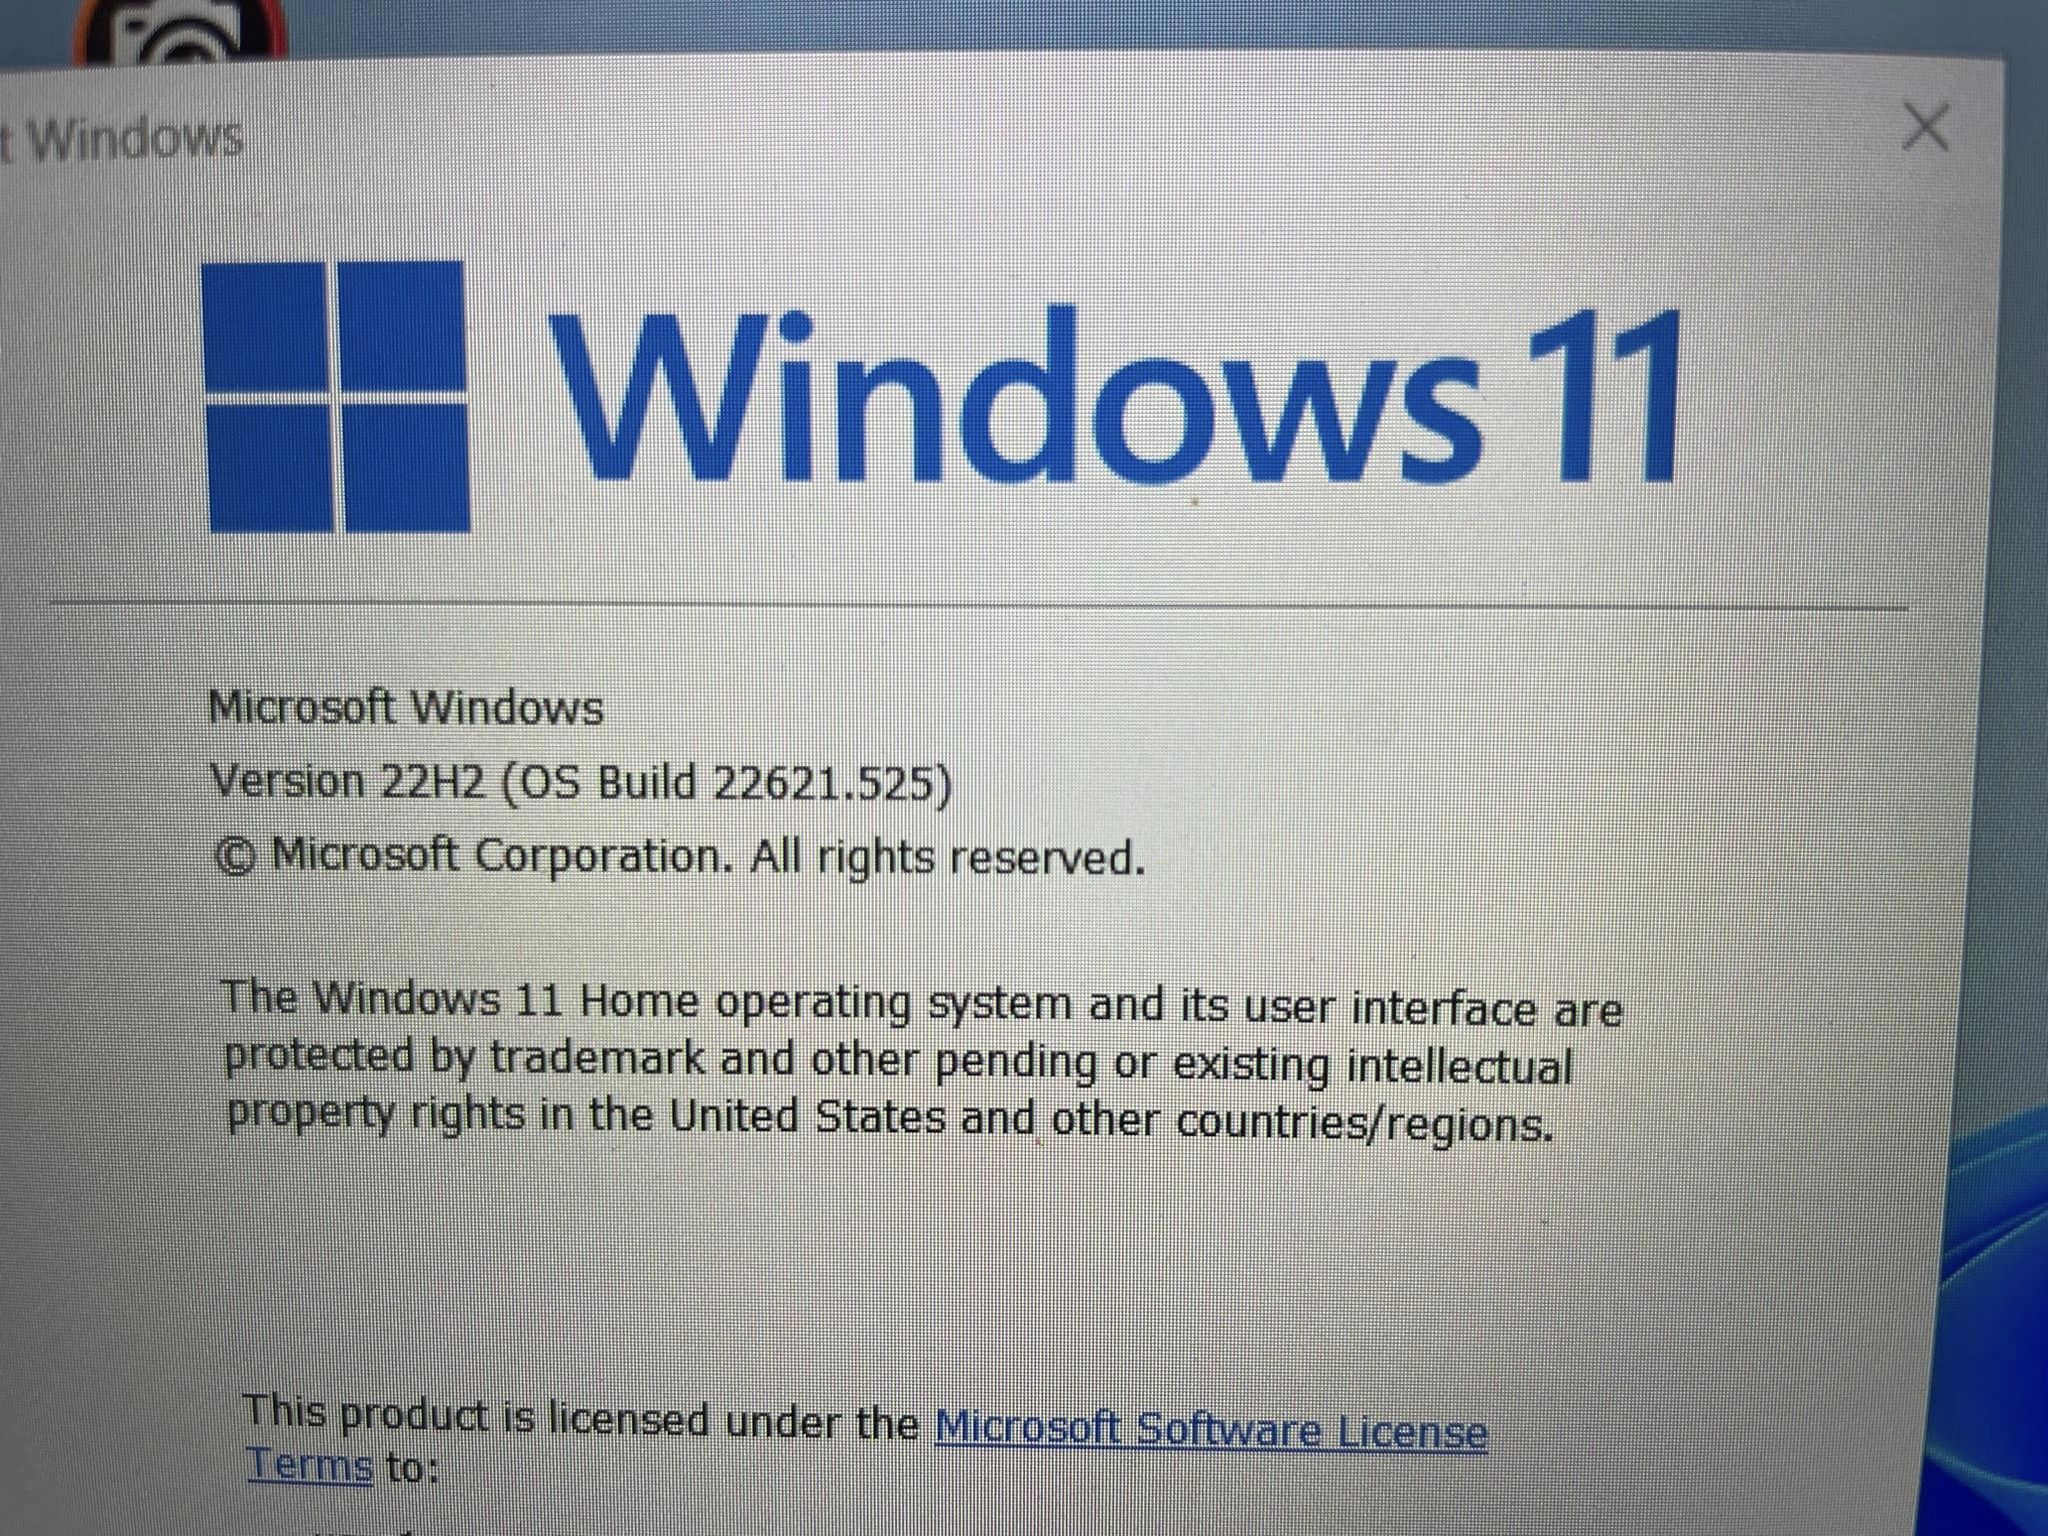 Cara Update Windows 11 Versi 22H2